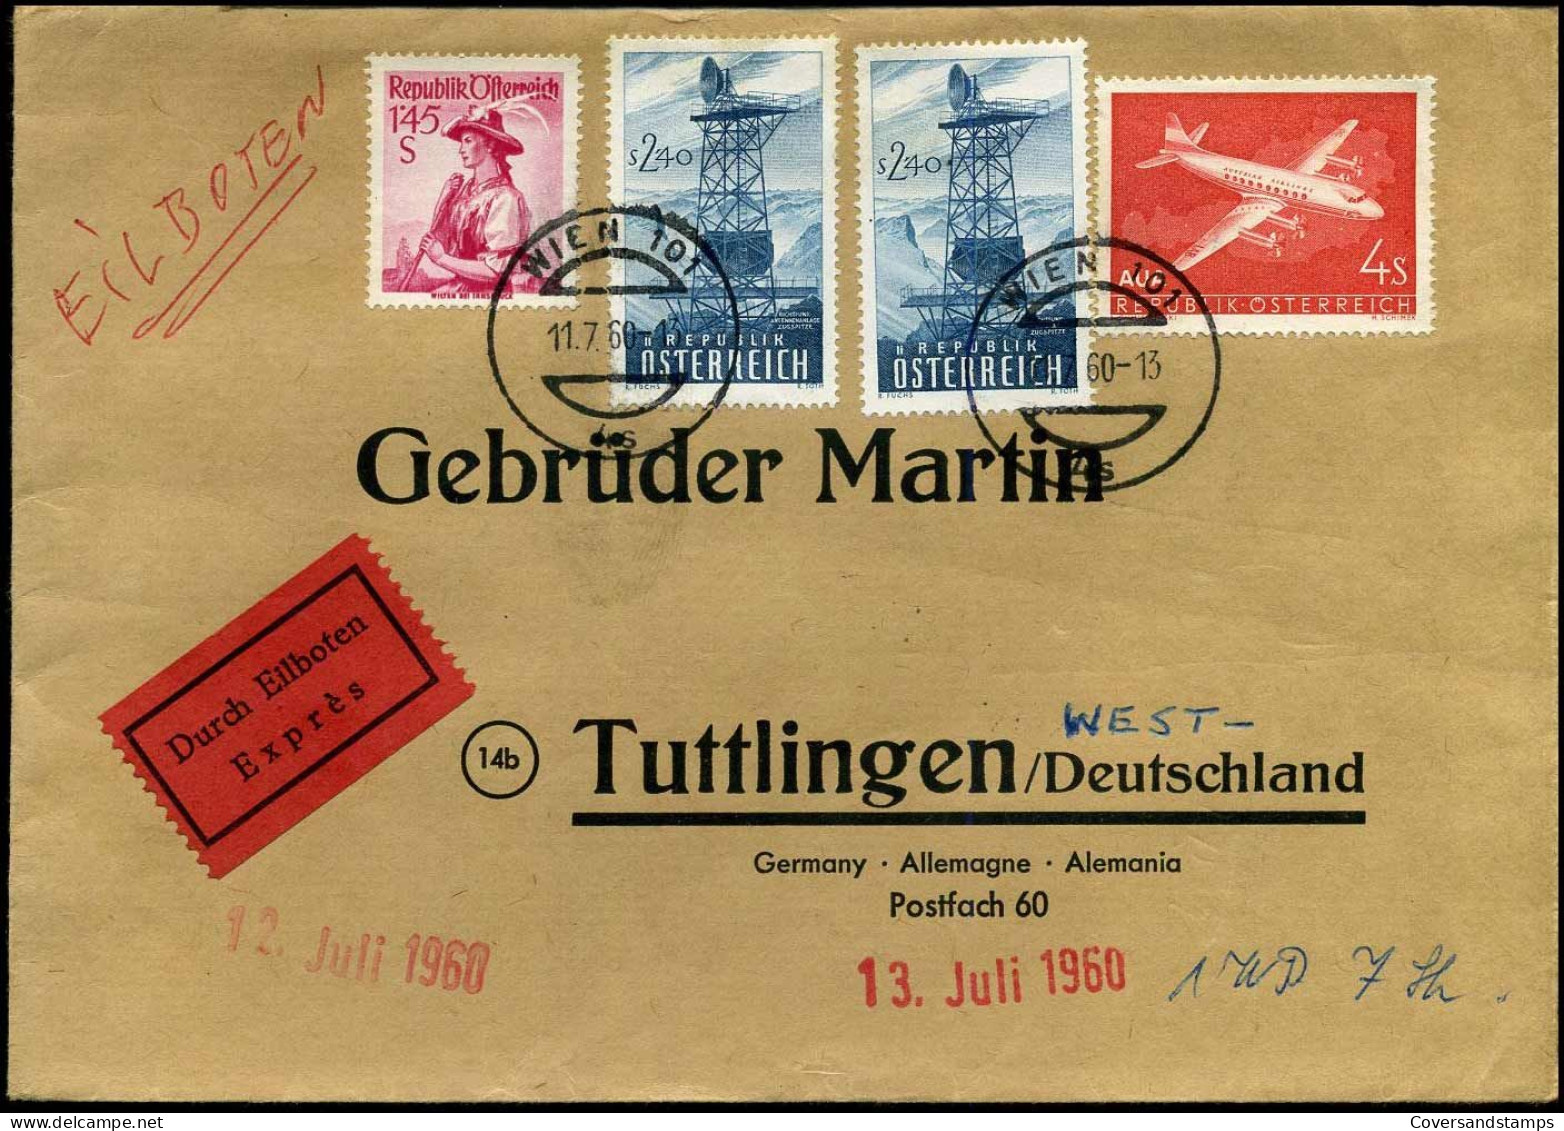 Express Cover To Tuttlingen, Germany - "Gebrüder Martin" - Covers & Documents